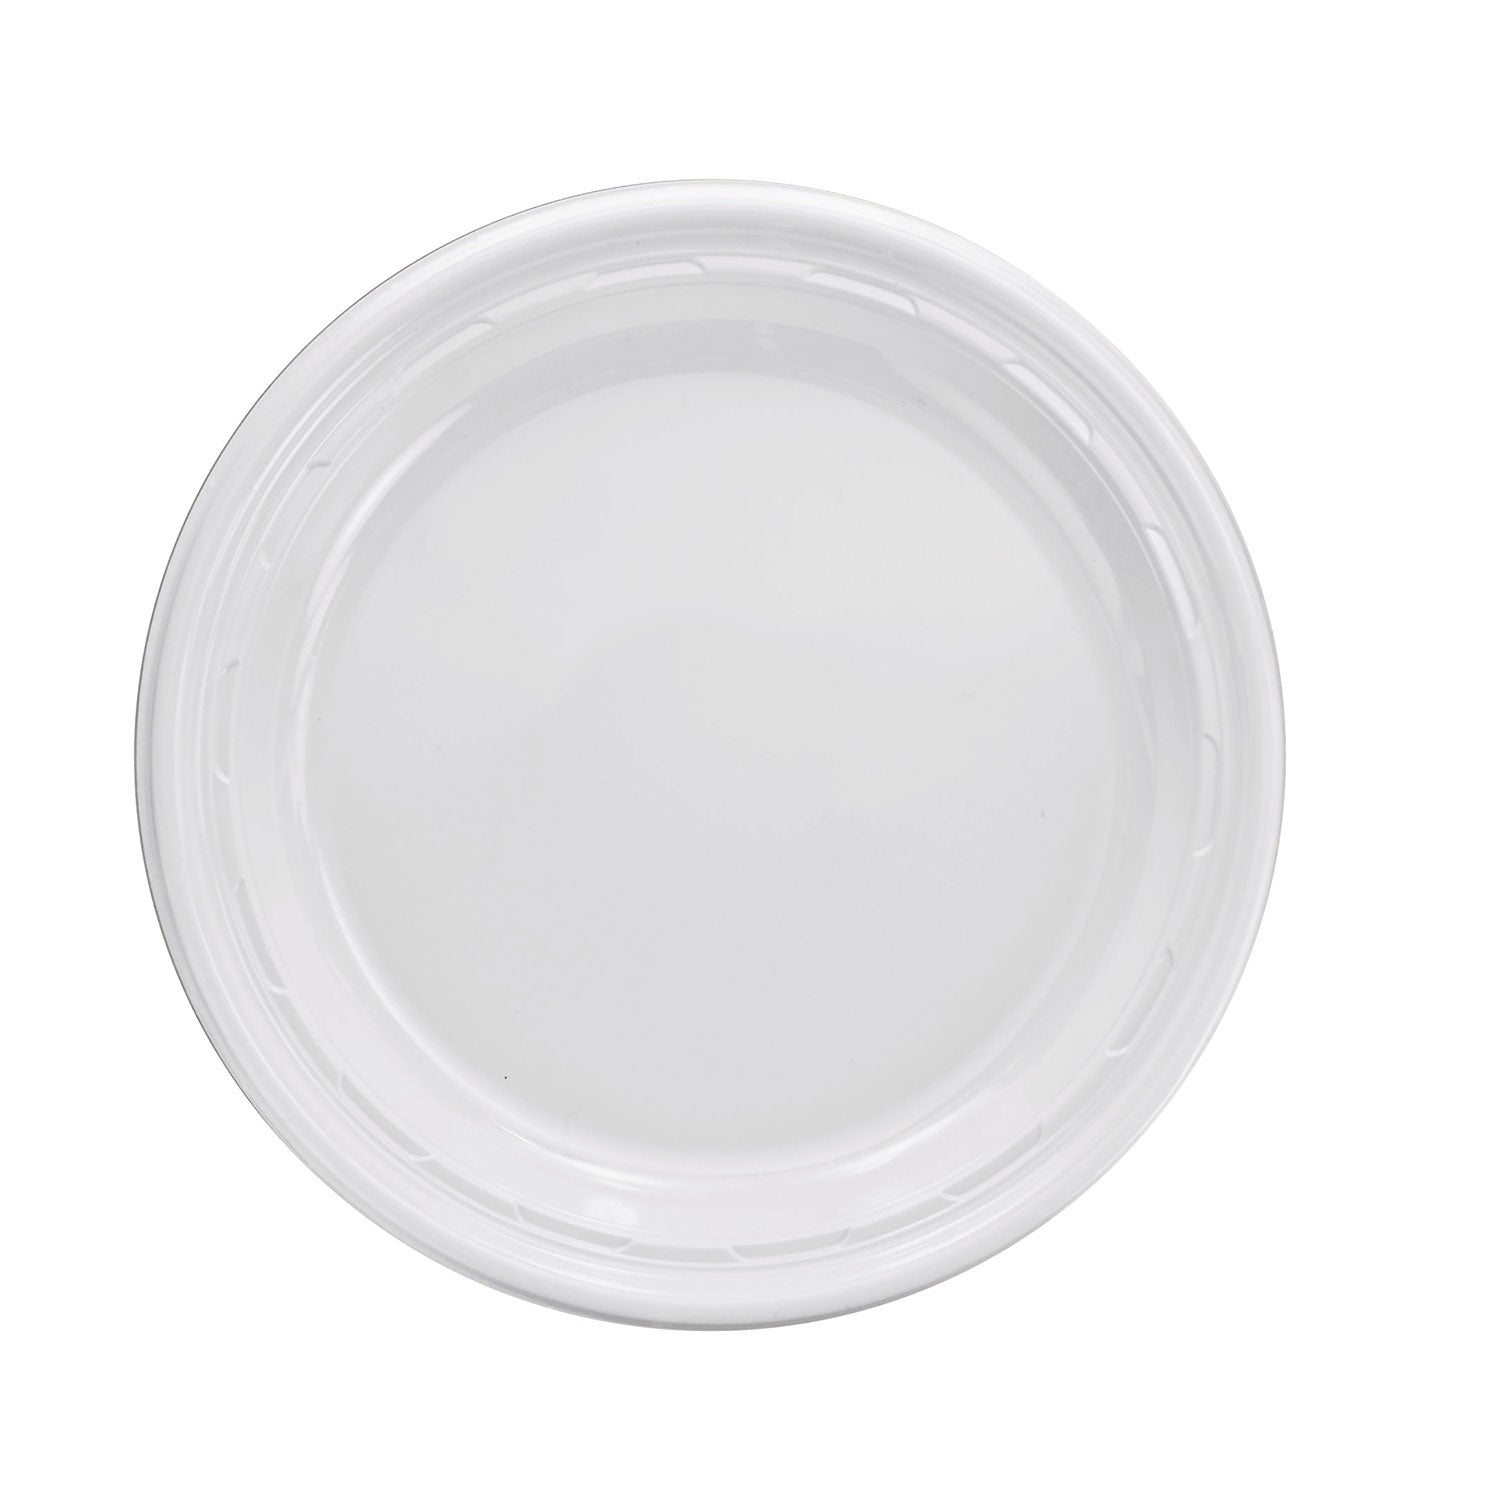 Famous Service Plastic Dinnerware, Plate, 9", White, 125/Pack, 4 Packs/Carton - 